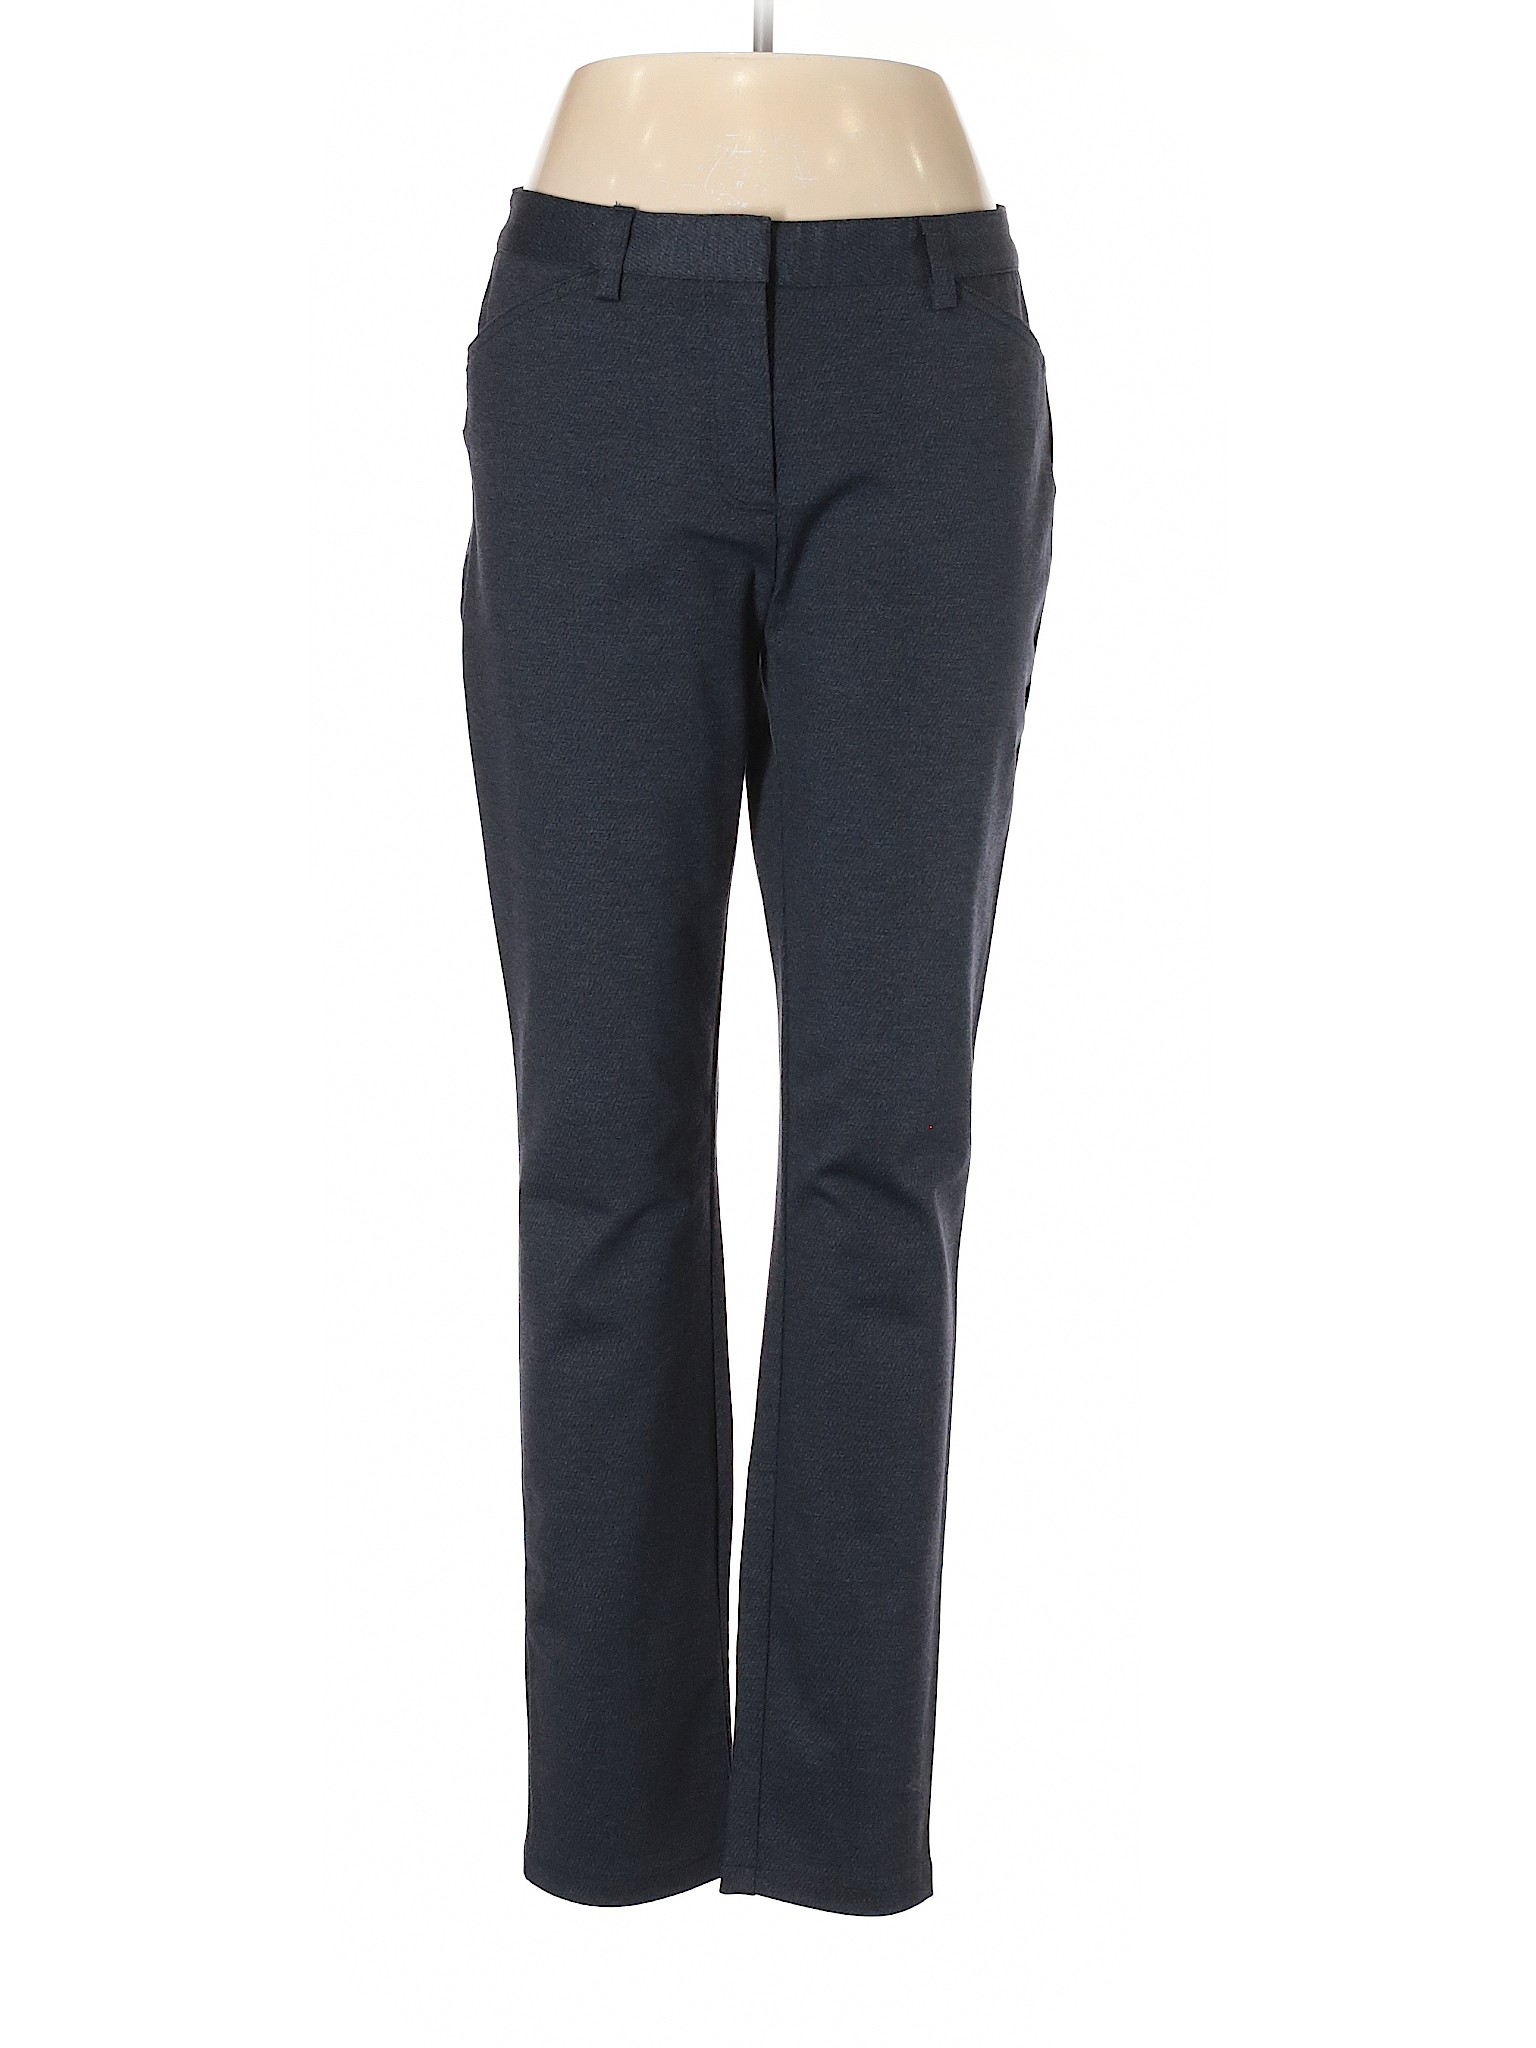 Andrew Marc for Costco Women Blue Dress Pants 10 | eBay